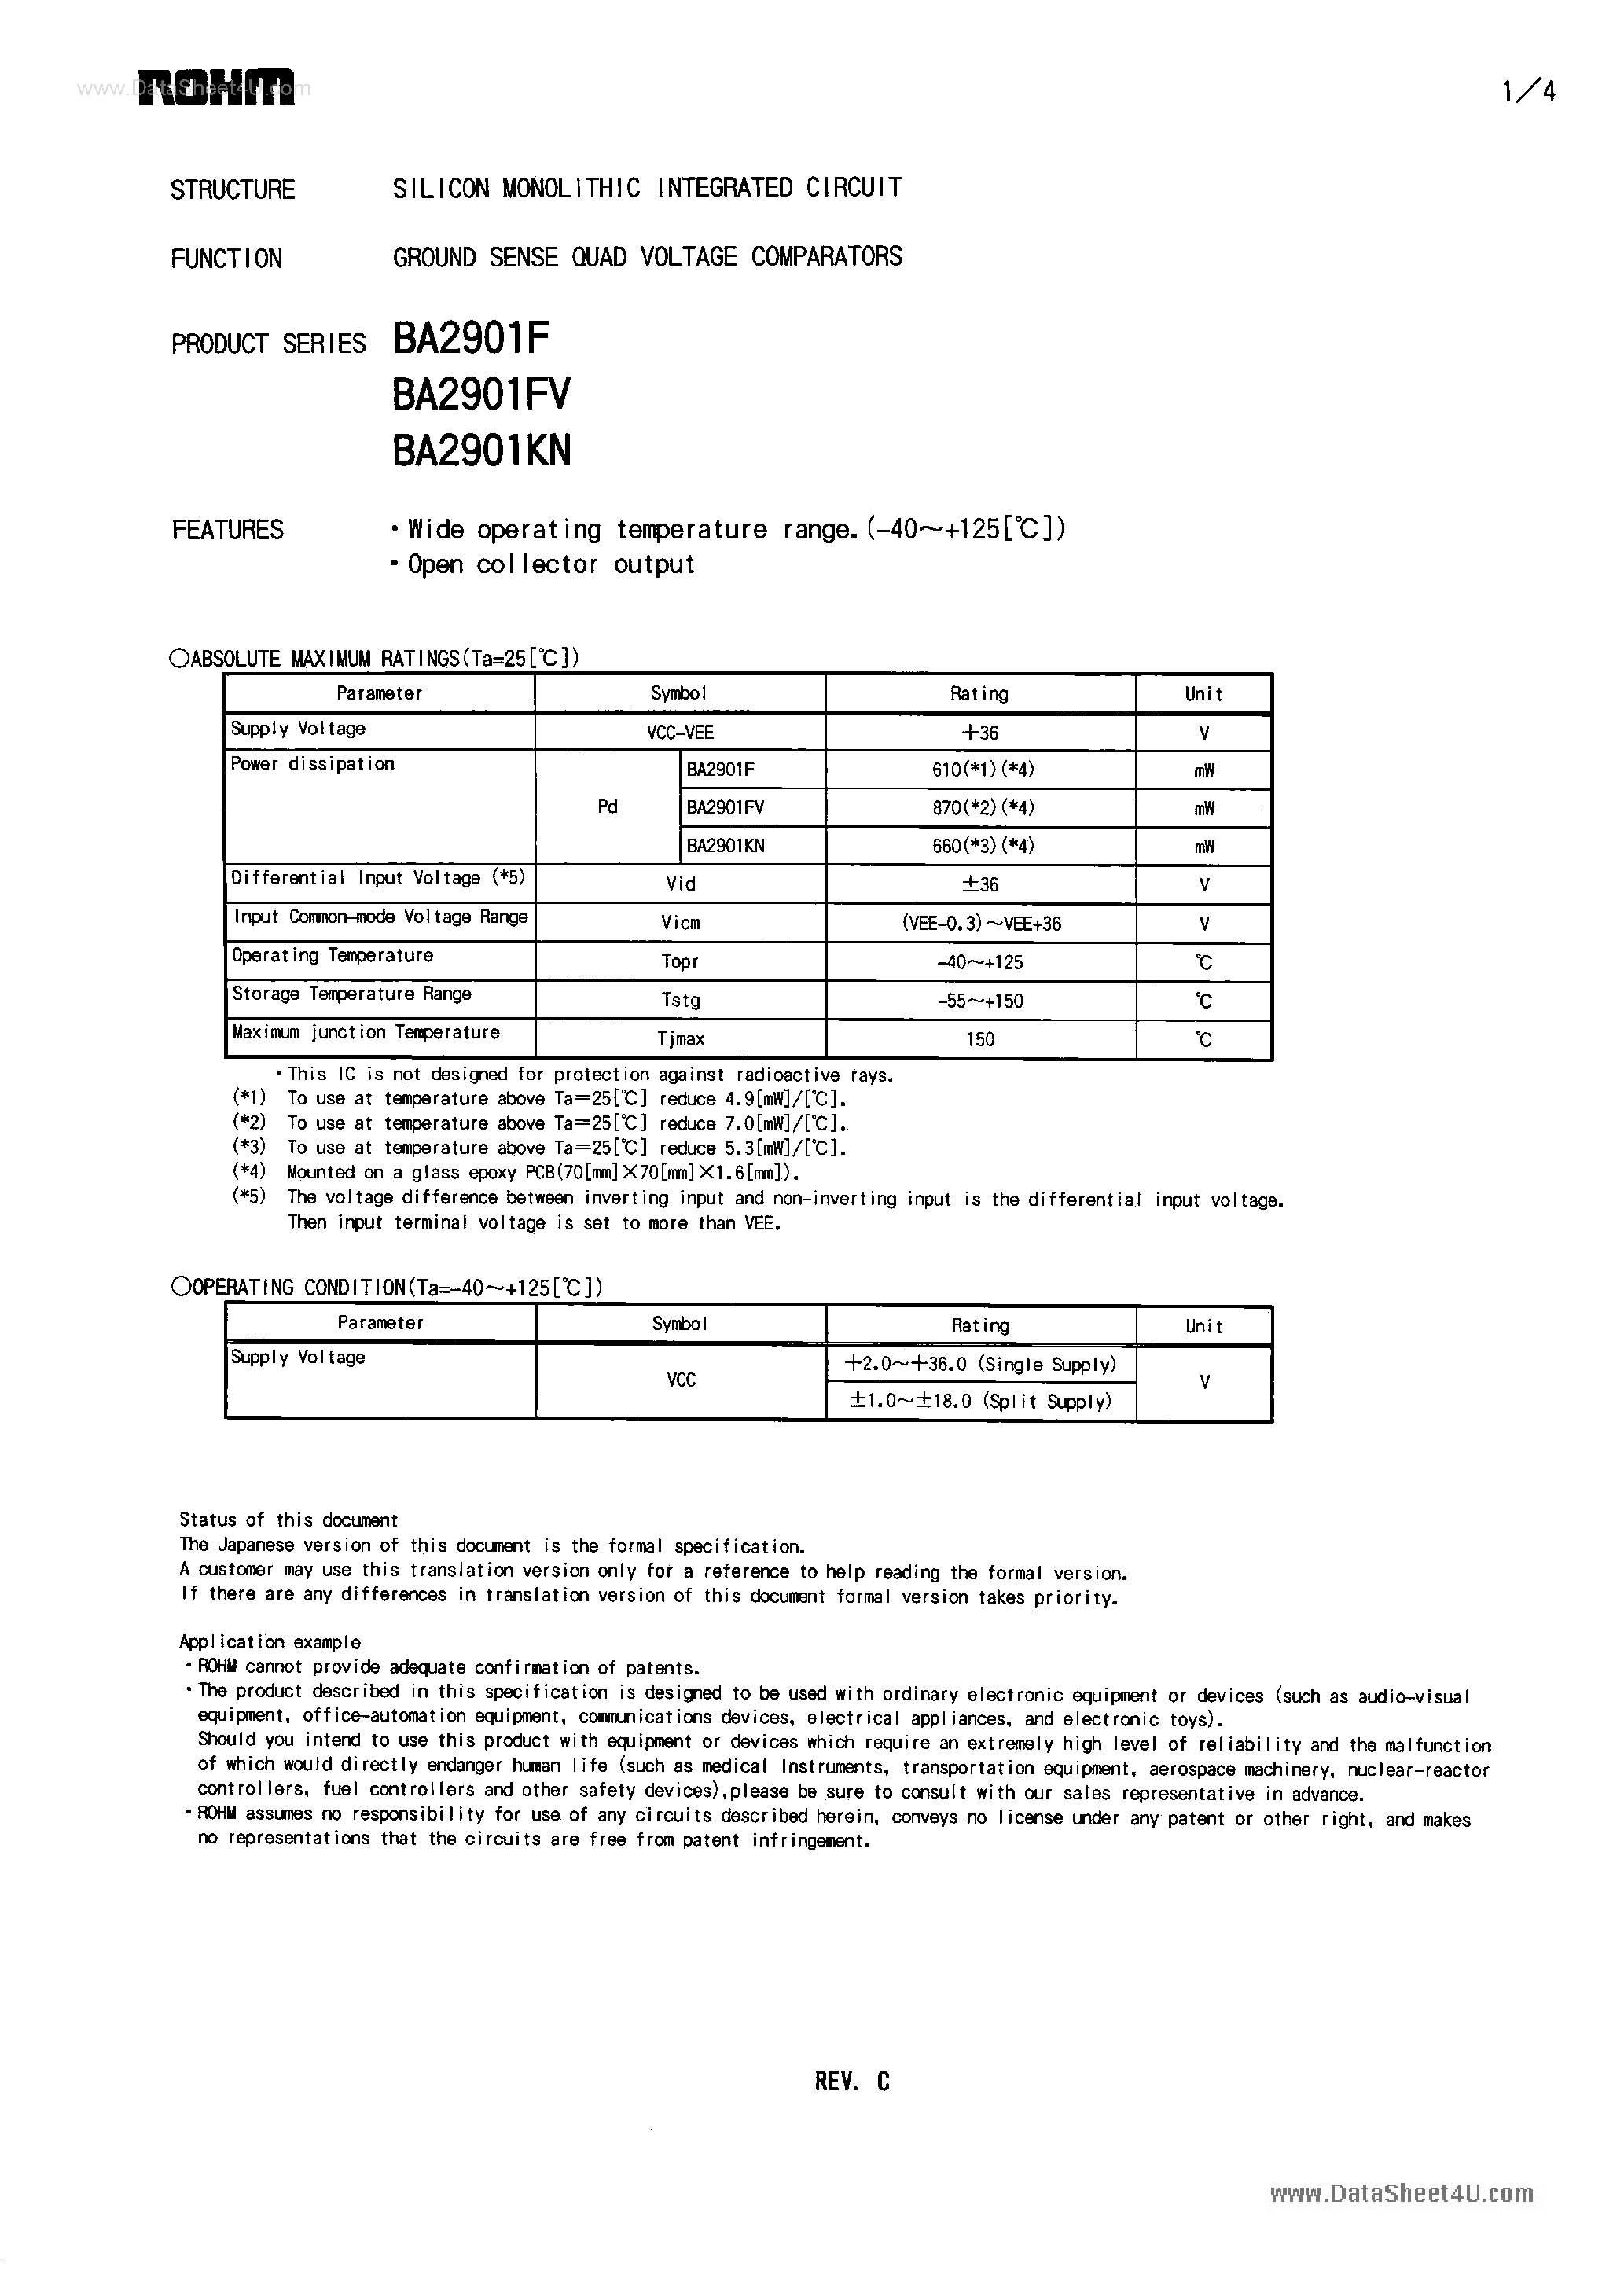 Datasheet BA2901F - GROUND SENSE QUAD VOLTAGE COMPARATORS page 1